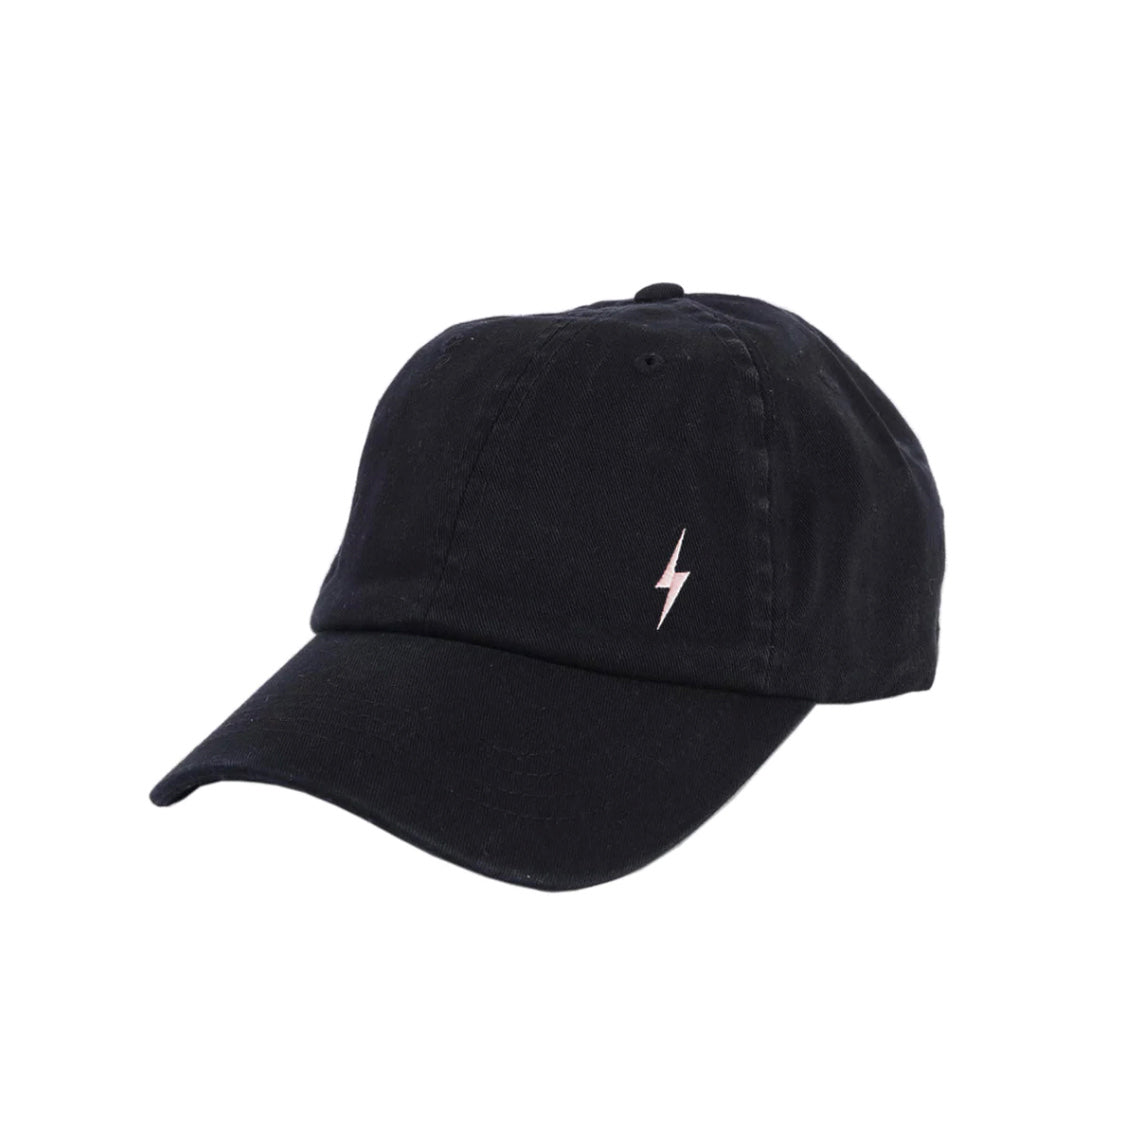 Lightning Embroidered cap